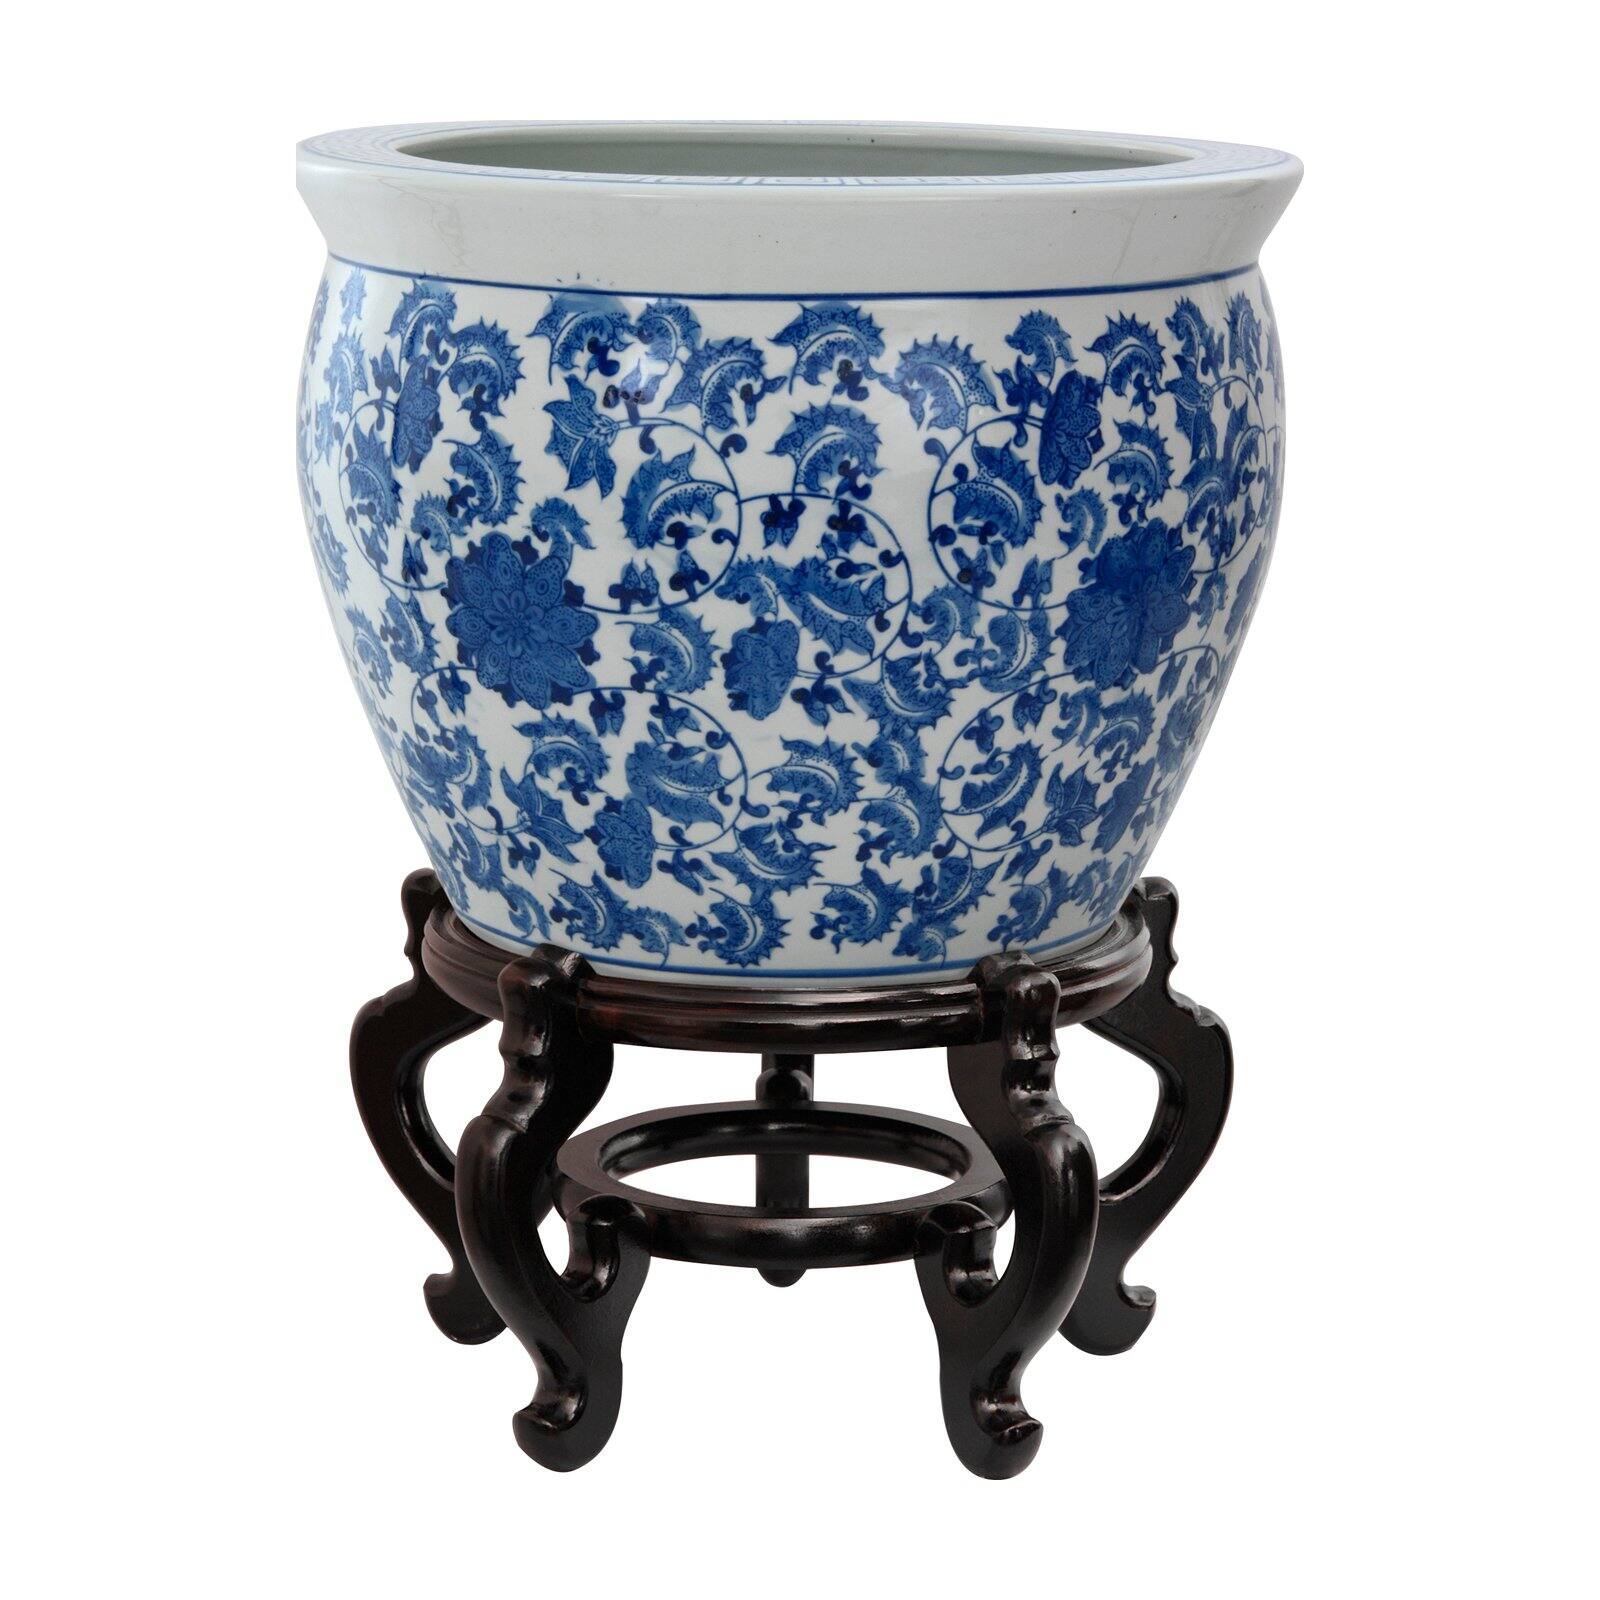 Oriental Furniture 16" Floral Blue & White Porcelain Fishbowl - image 1 of 3